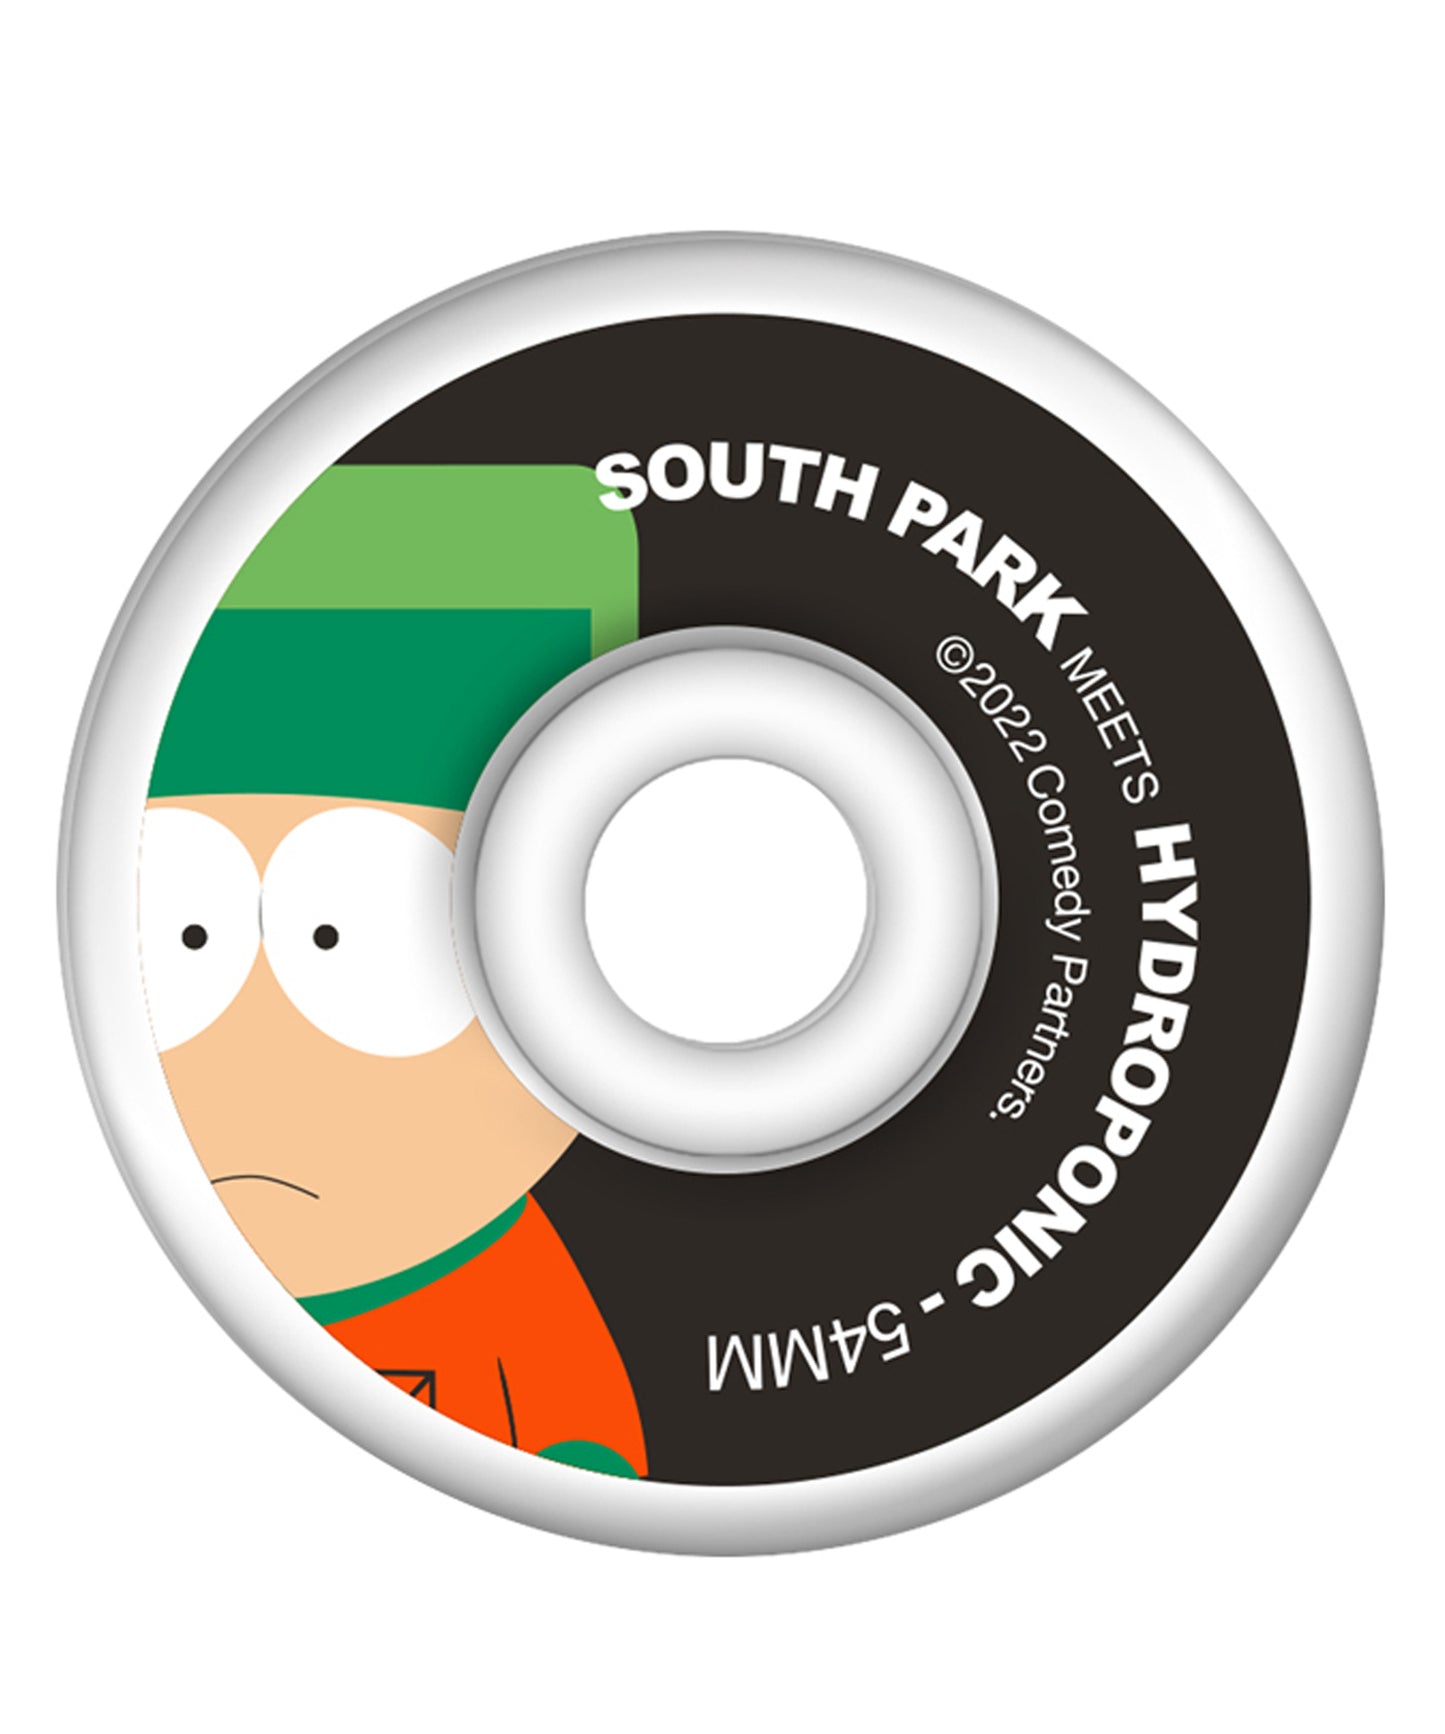 Hydroponic-ruedas de skate 53mm colleccion Kyle South Park